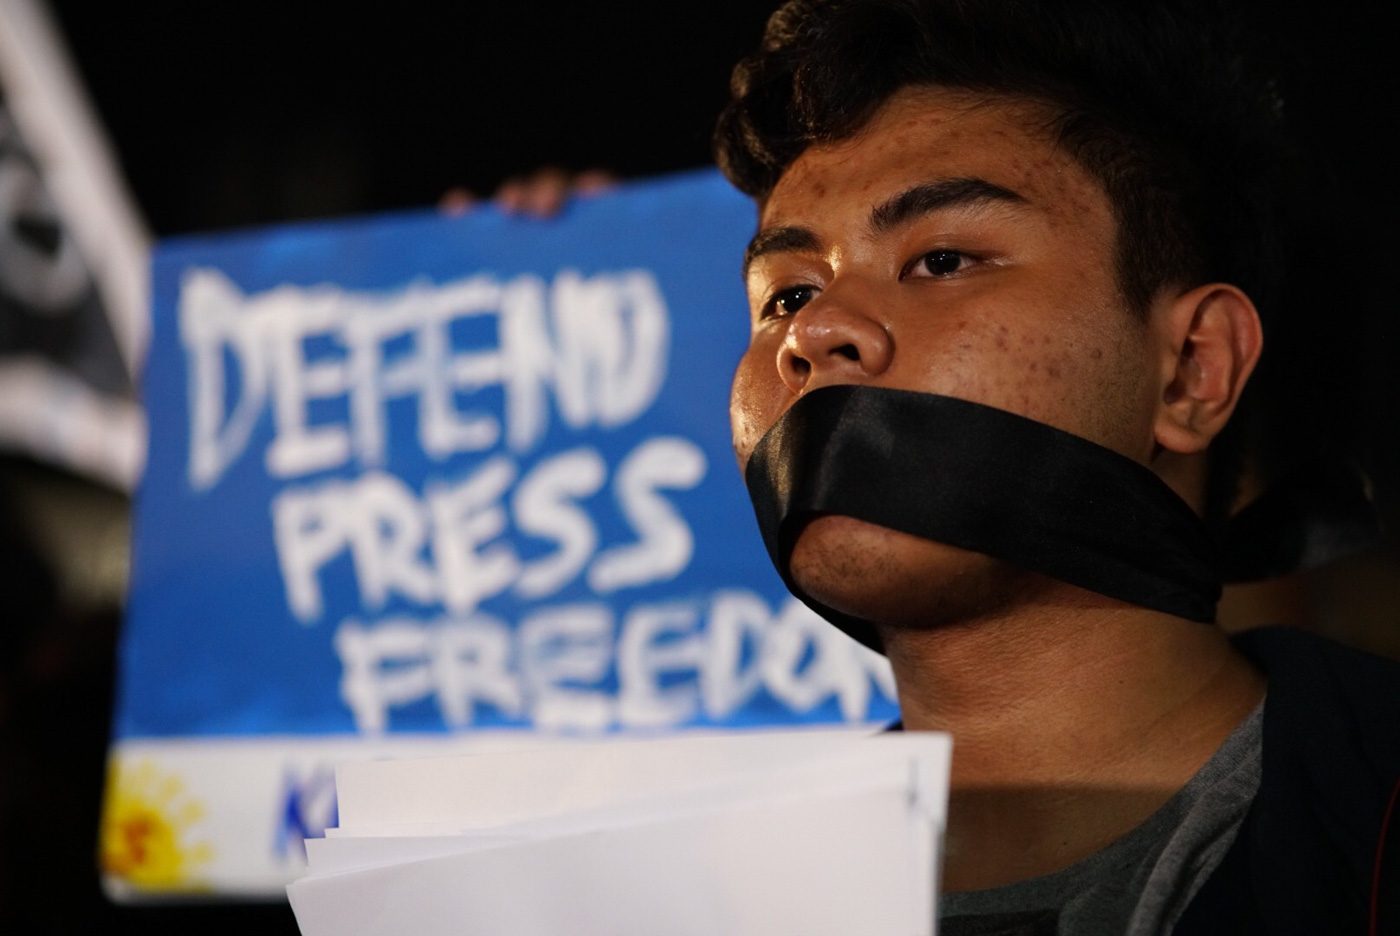 Suppressing media is suppressing people’s demands – progressive groups, advocates